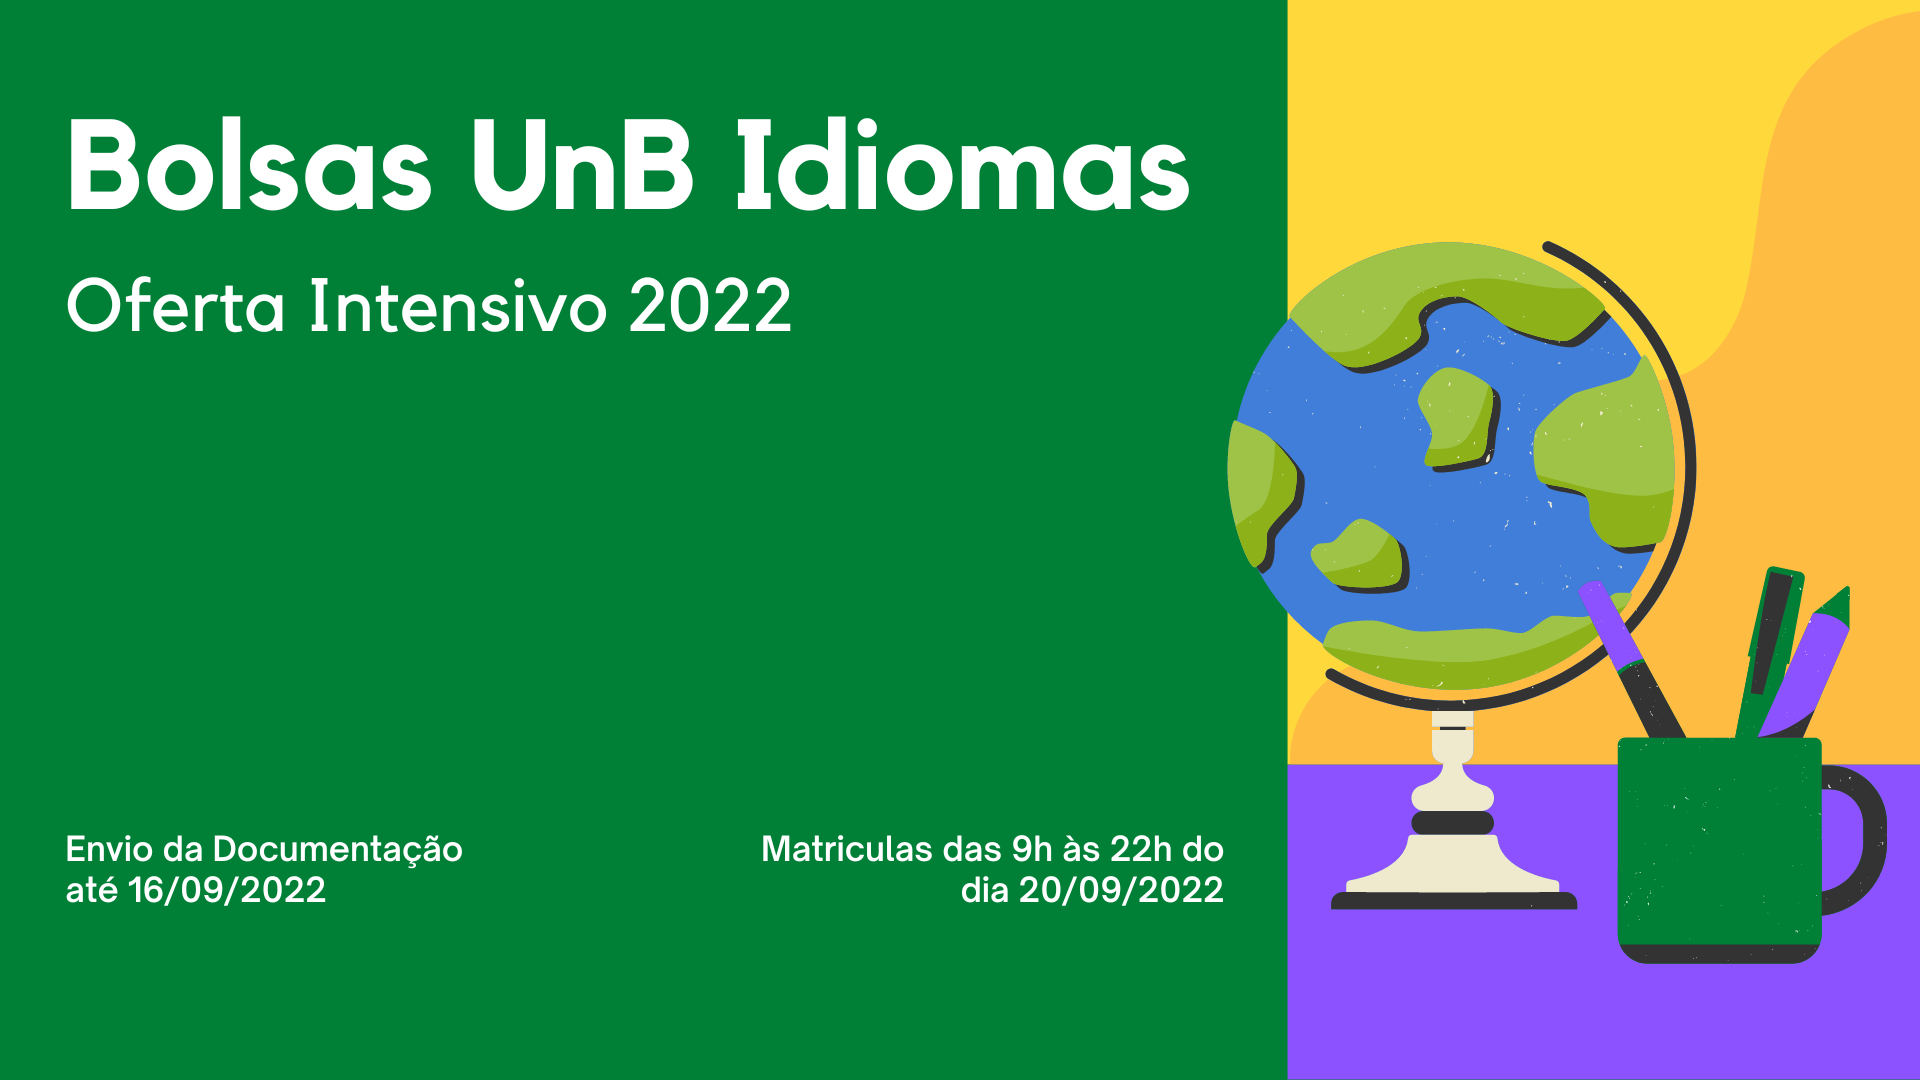 Bolsas UnB Idiomas (Intensivo 2022)